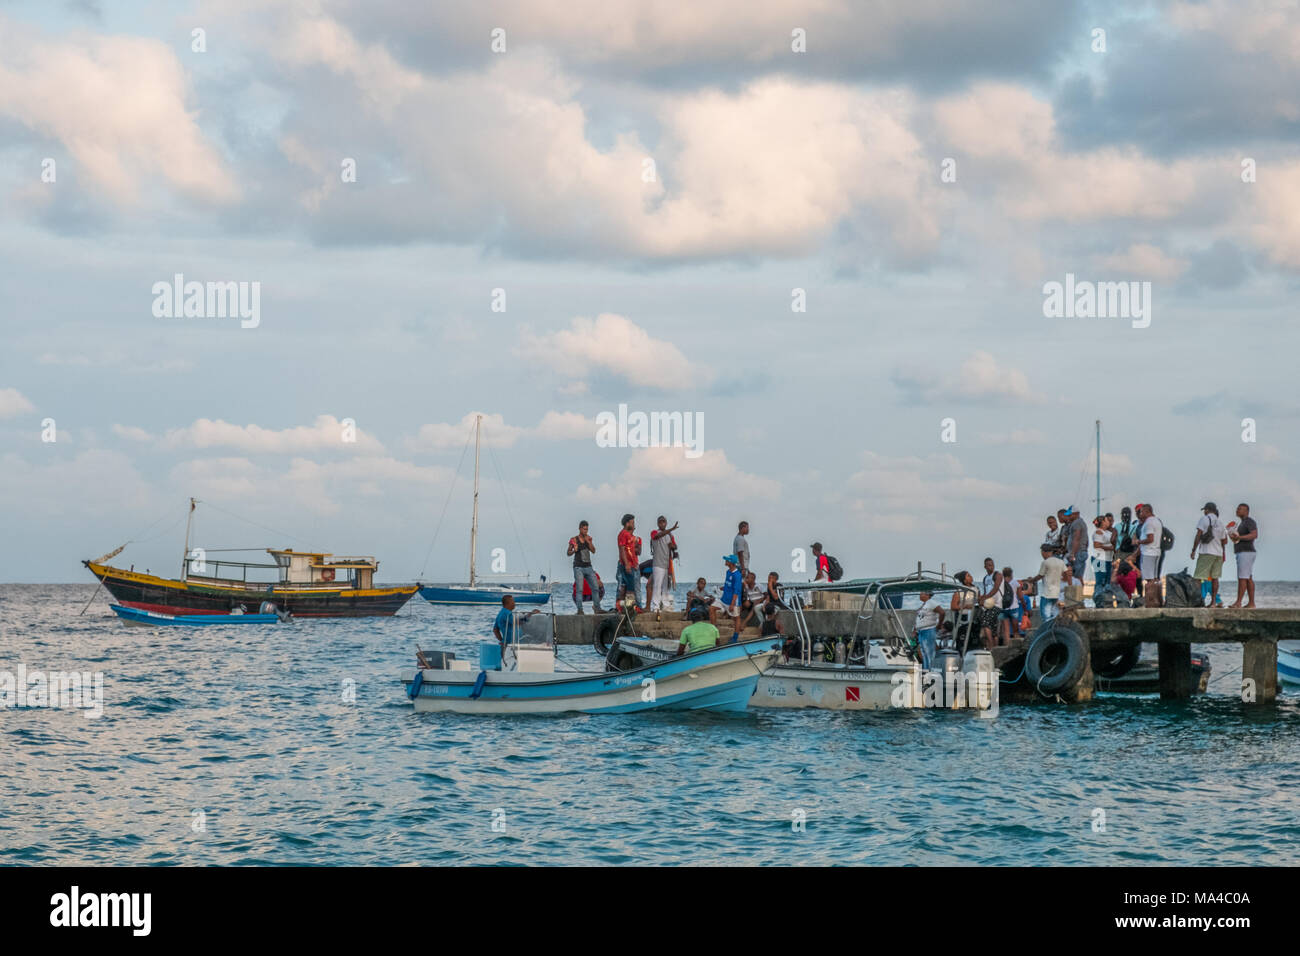 Capurgana, Kolumbien - Februar 2018: Boote und Menschen am Hafen von Capurgana, Kolumbien nahe der Grenze zu Panama. Stockfoto